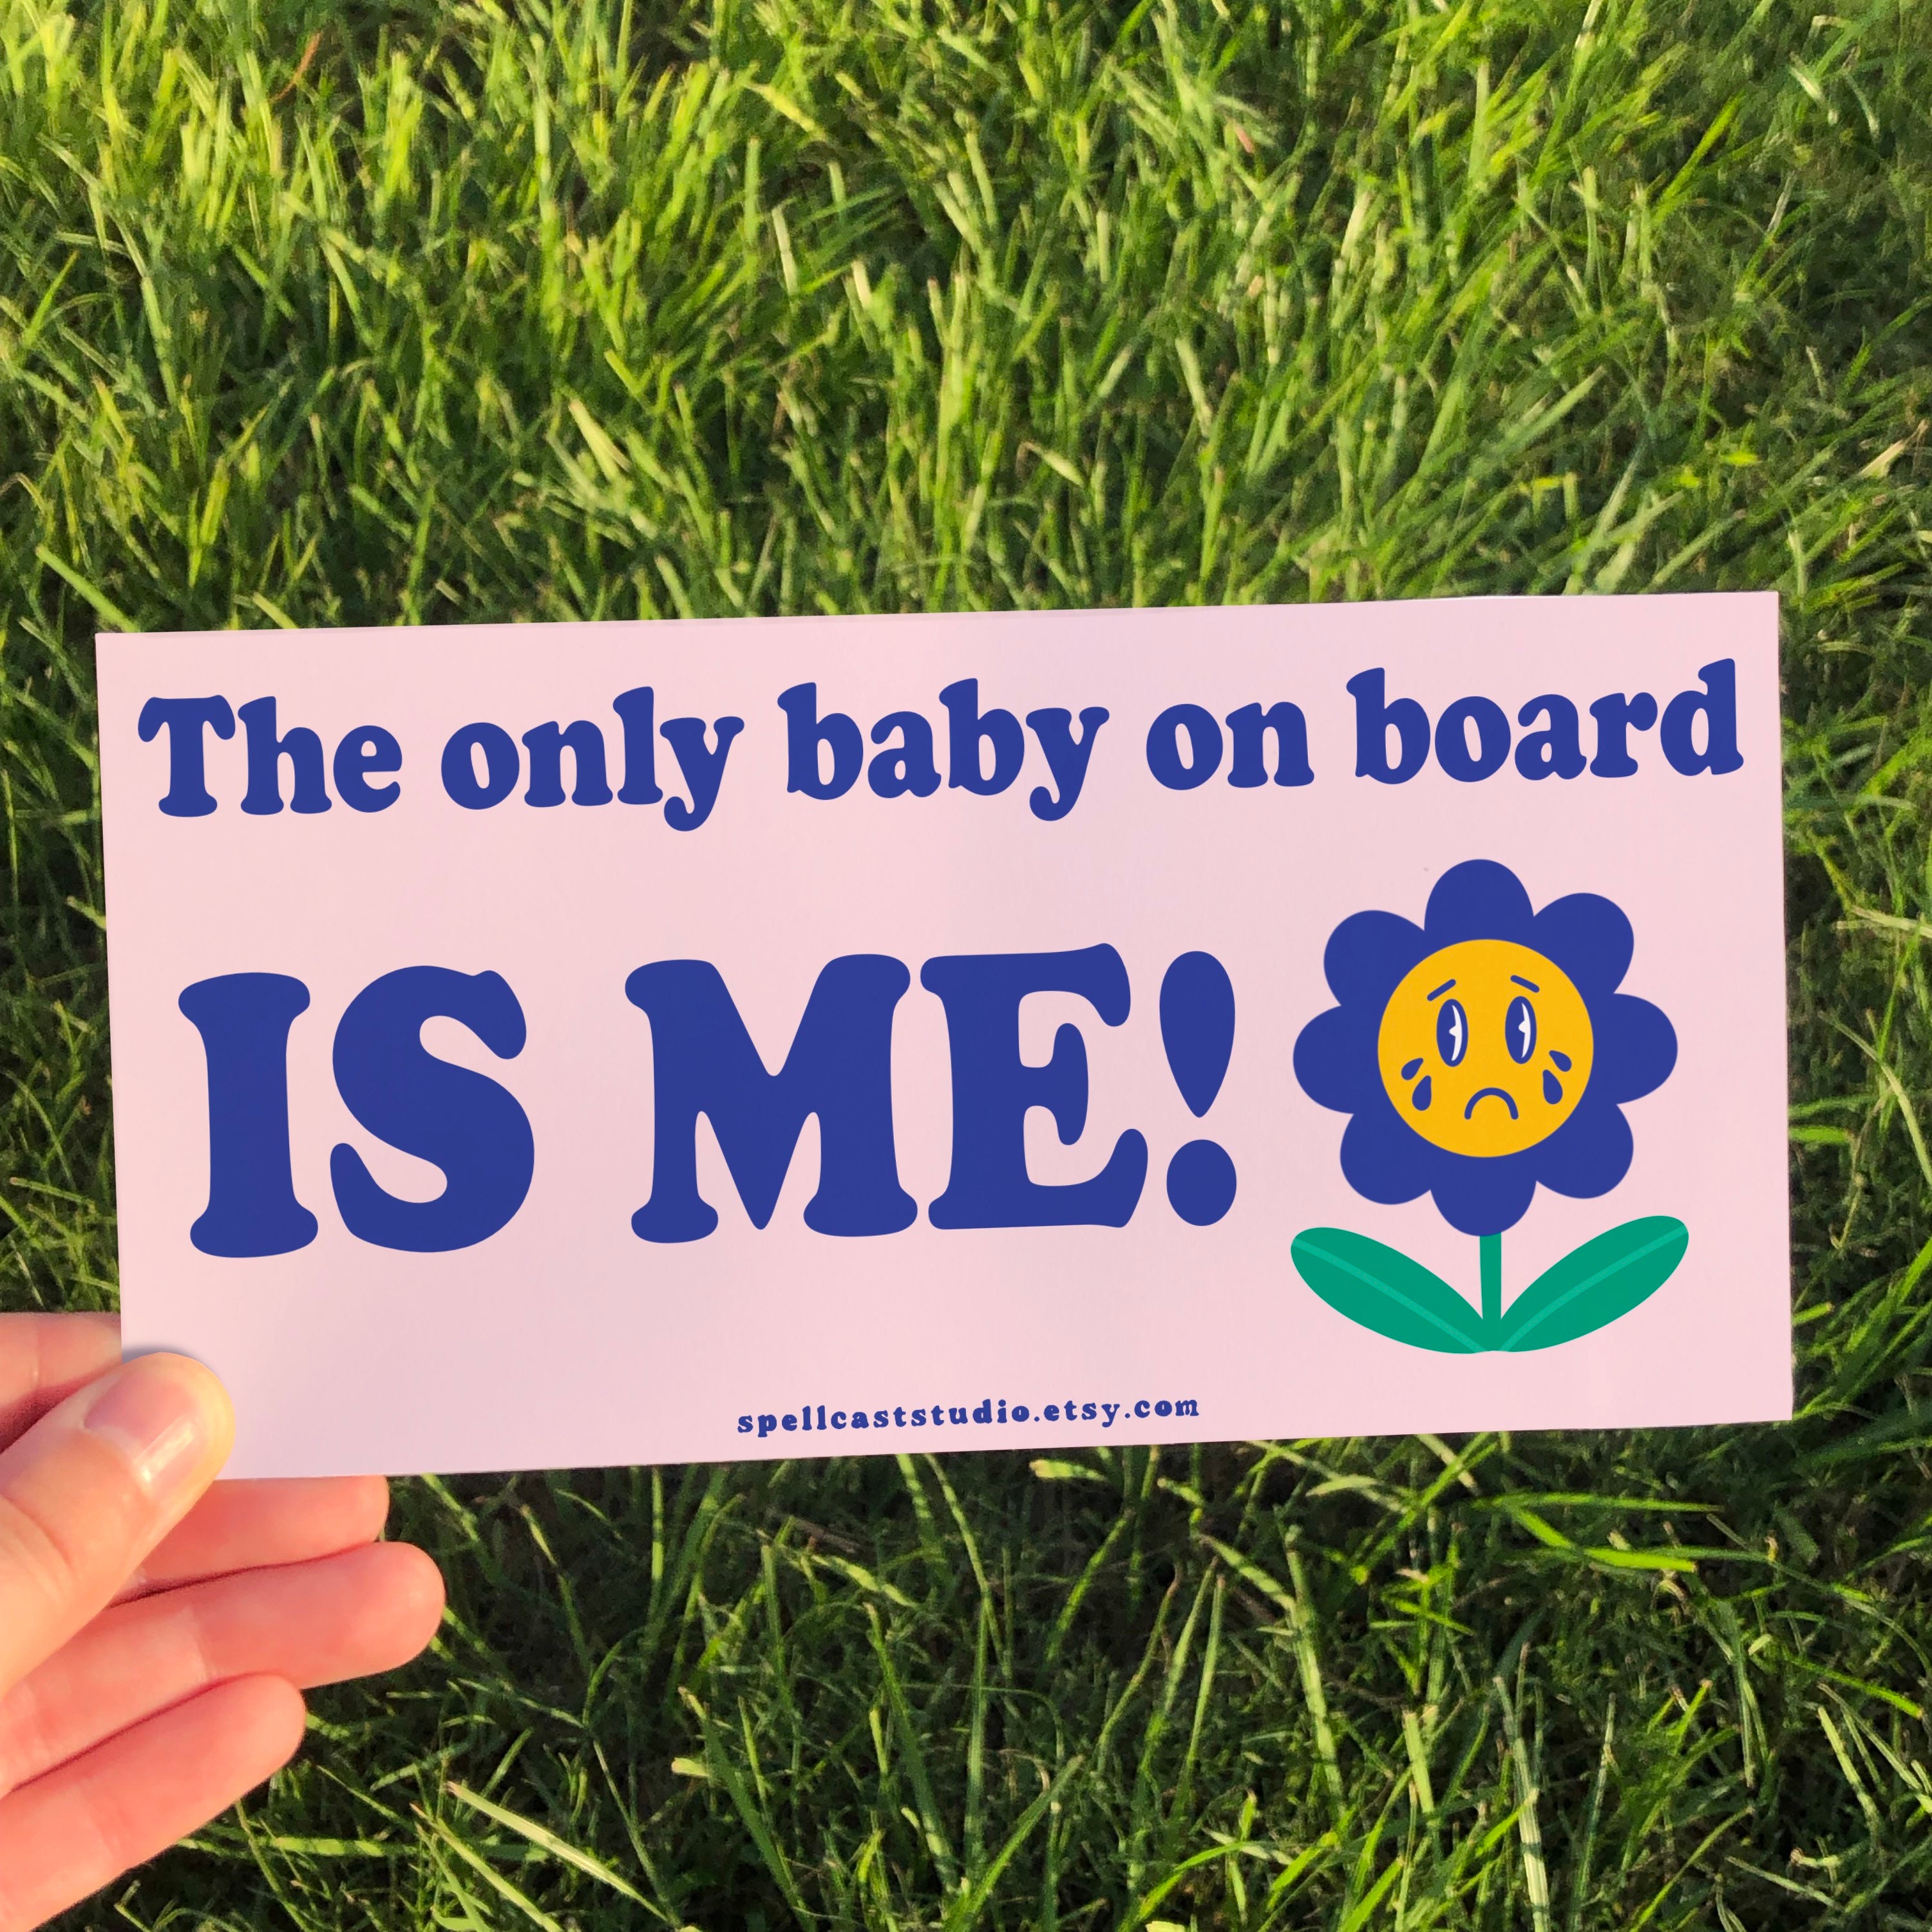 Baby on Board Bumper Sticker for Gen Z, the Only Baby on Board is